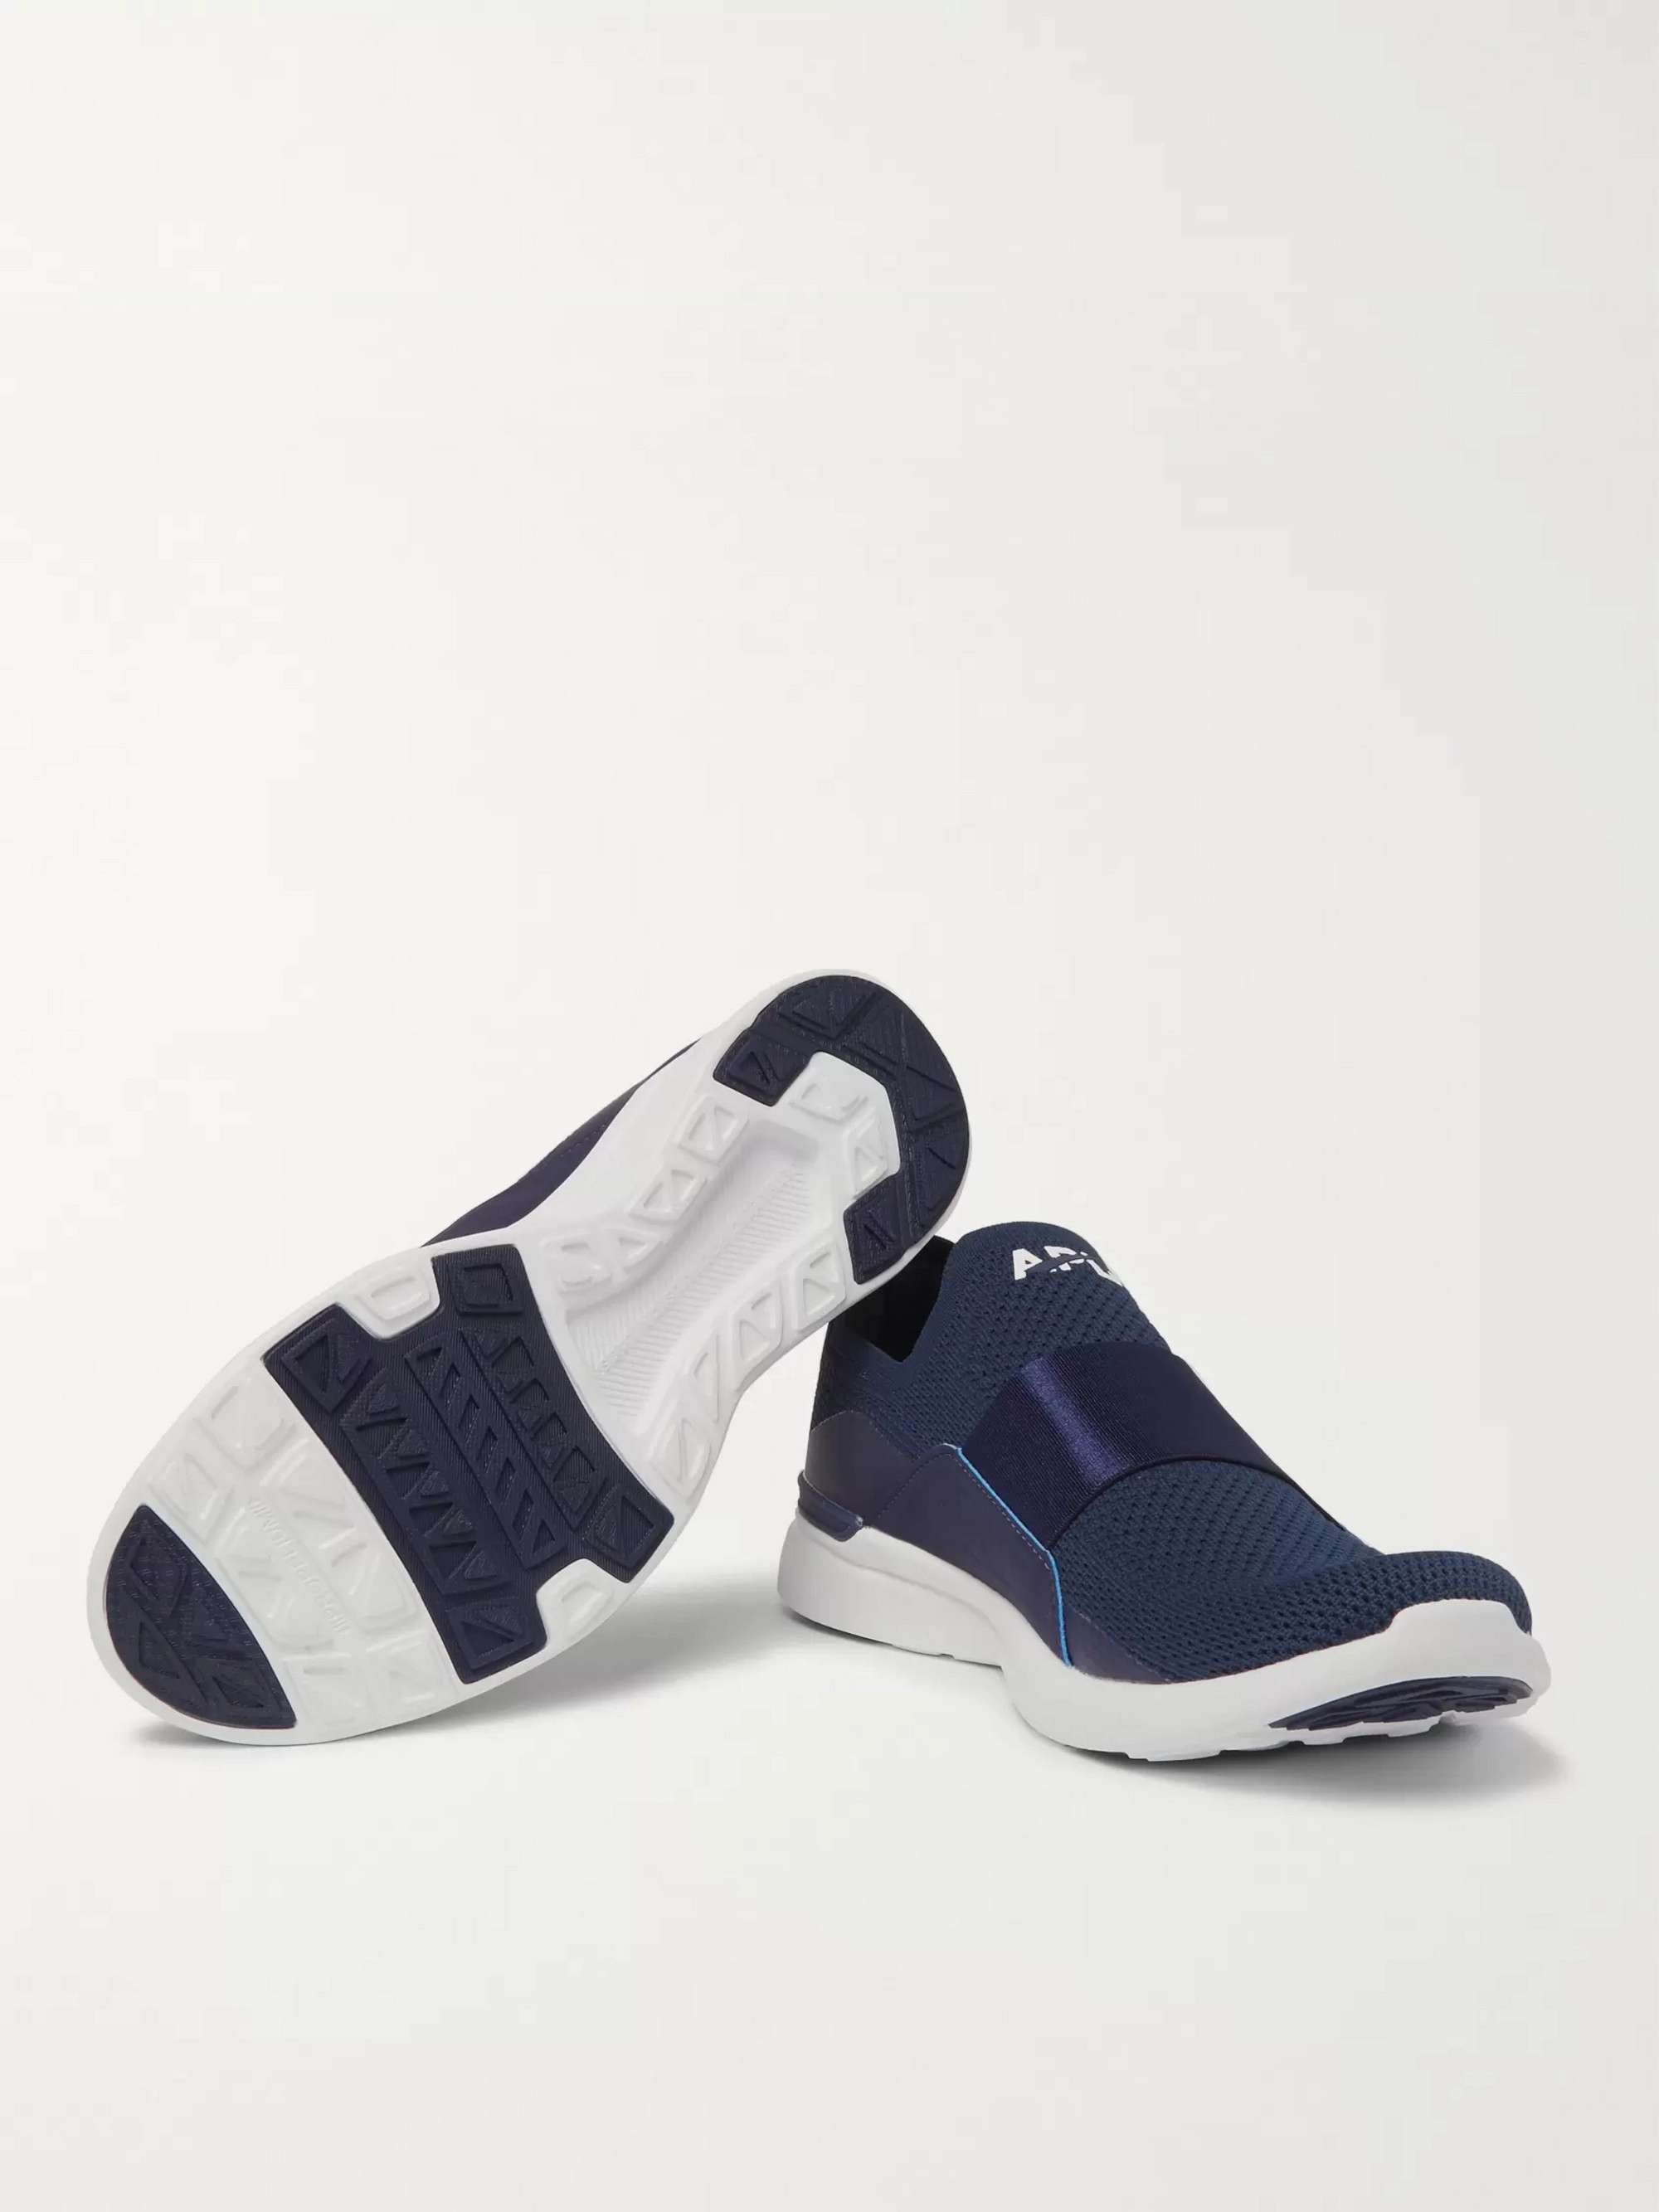 APL ATHLETIC PROPULSION LABS Bliss TechLoom Slip-On Running Sneakers